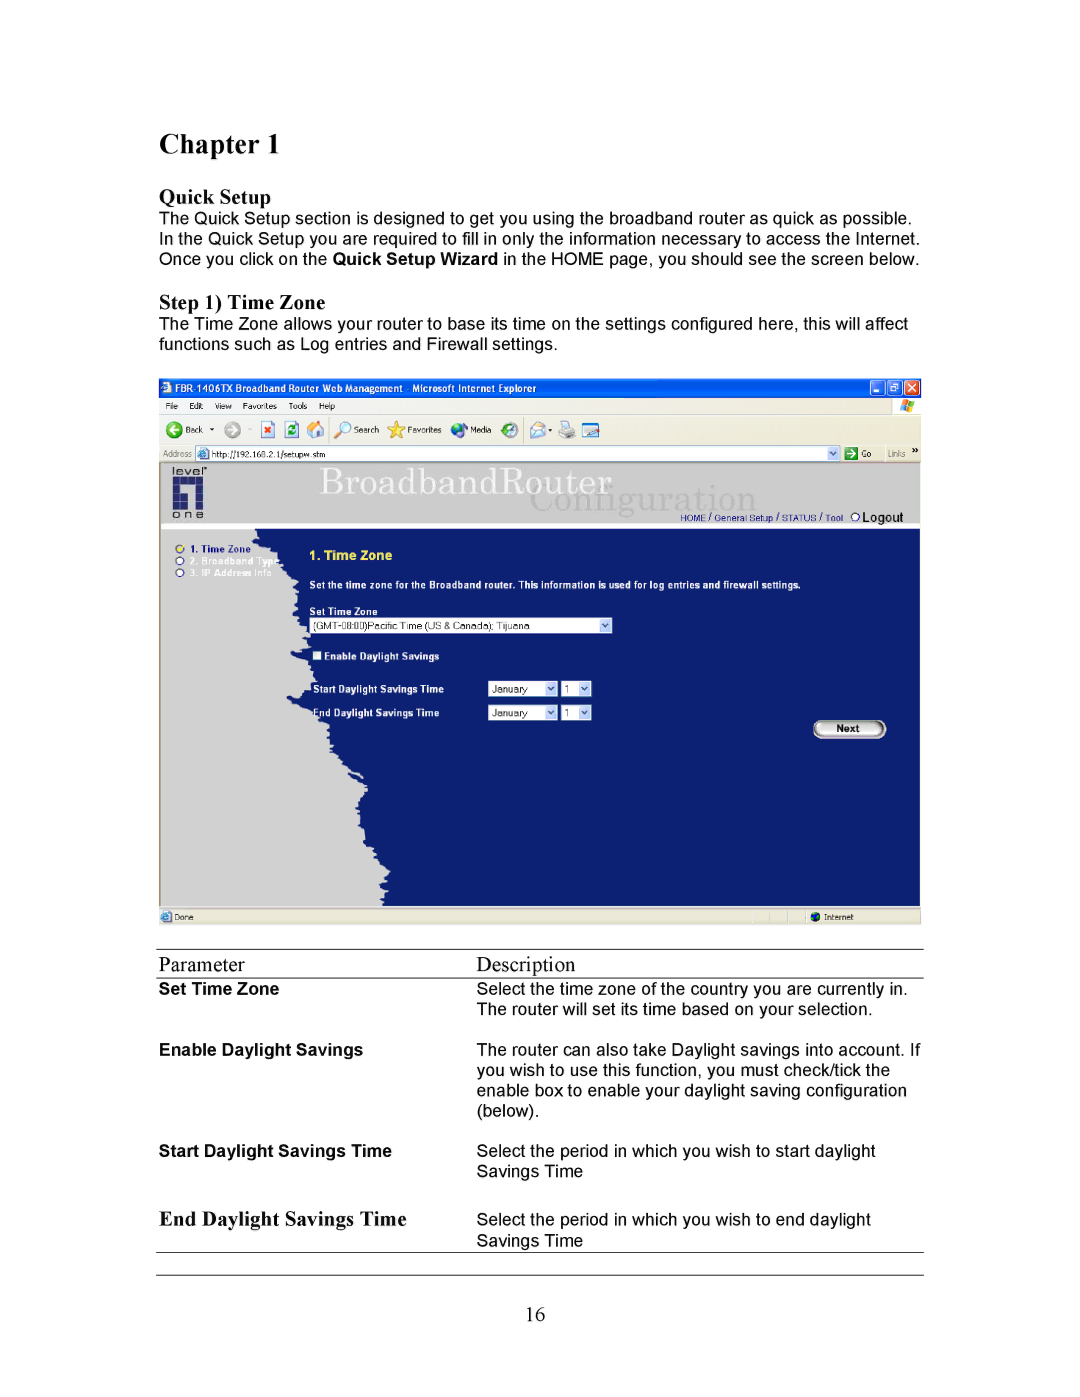 LevelOne FBR-1406TX manual Quick Setup, Time Zone, Parameter Description, End Daylight Savings Time 